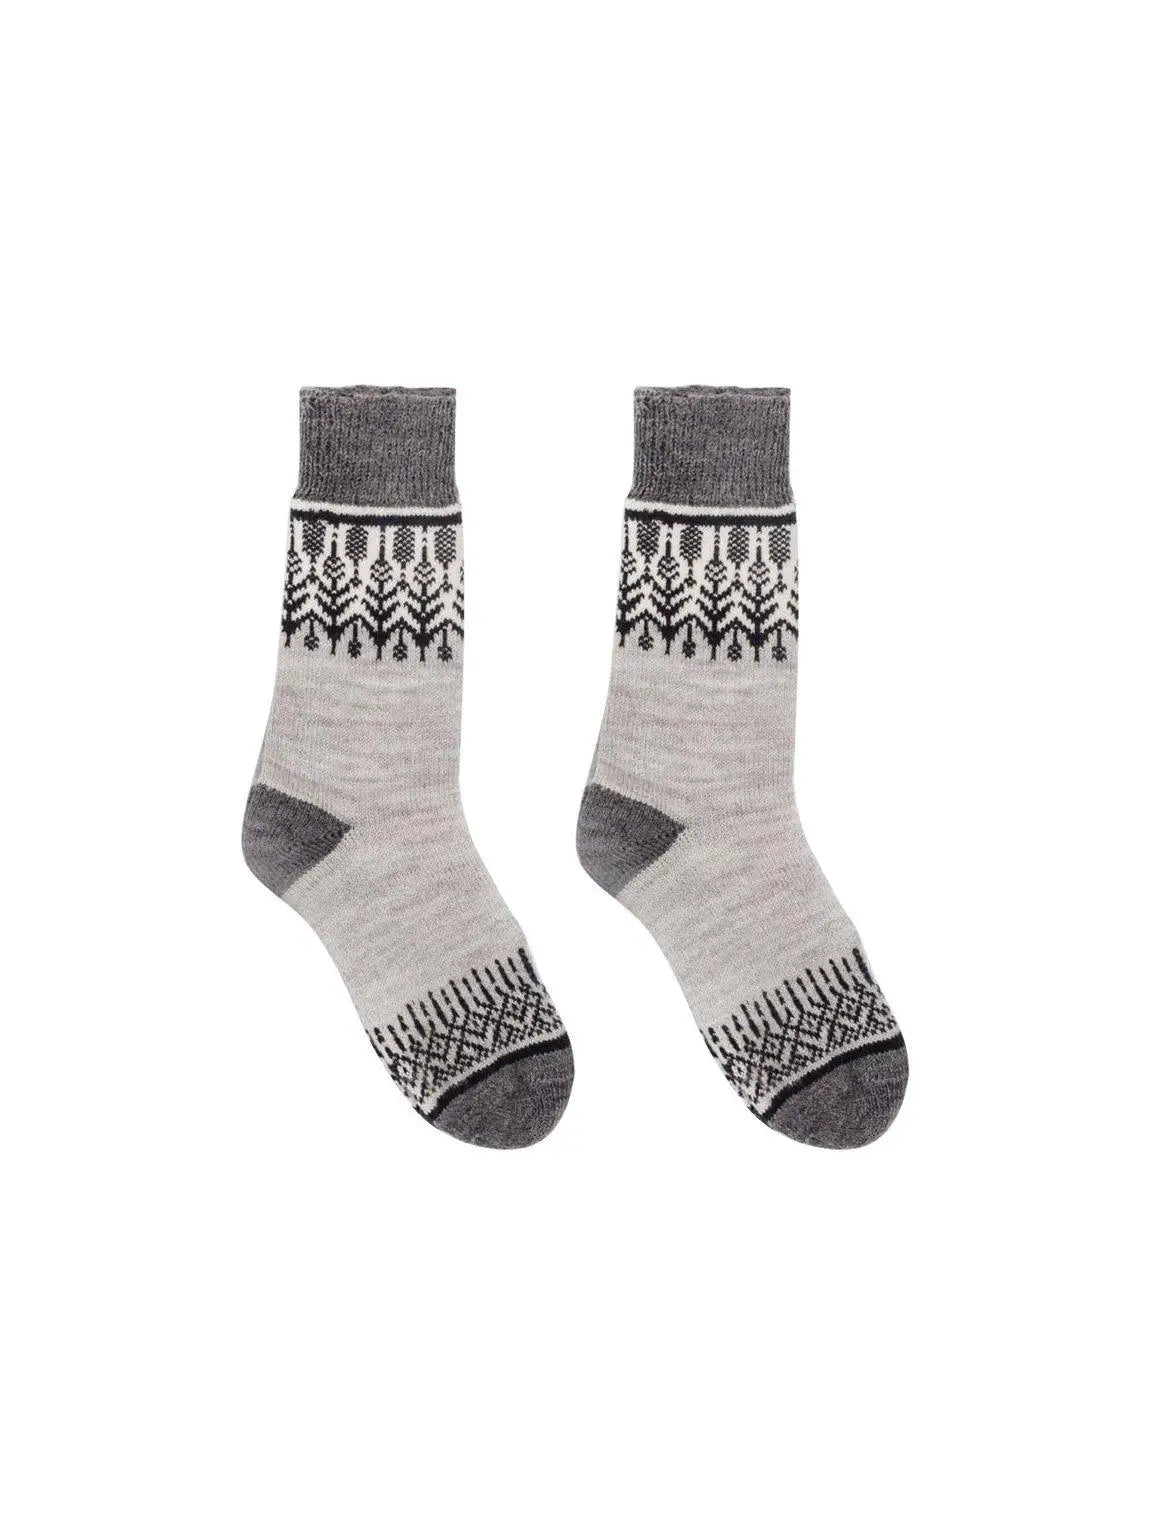 Nordic Socks Merino Wool PERFORM™ Warm (Yule) - Unisex - My Filosophy